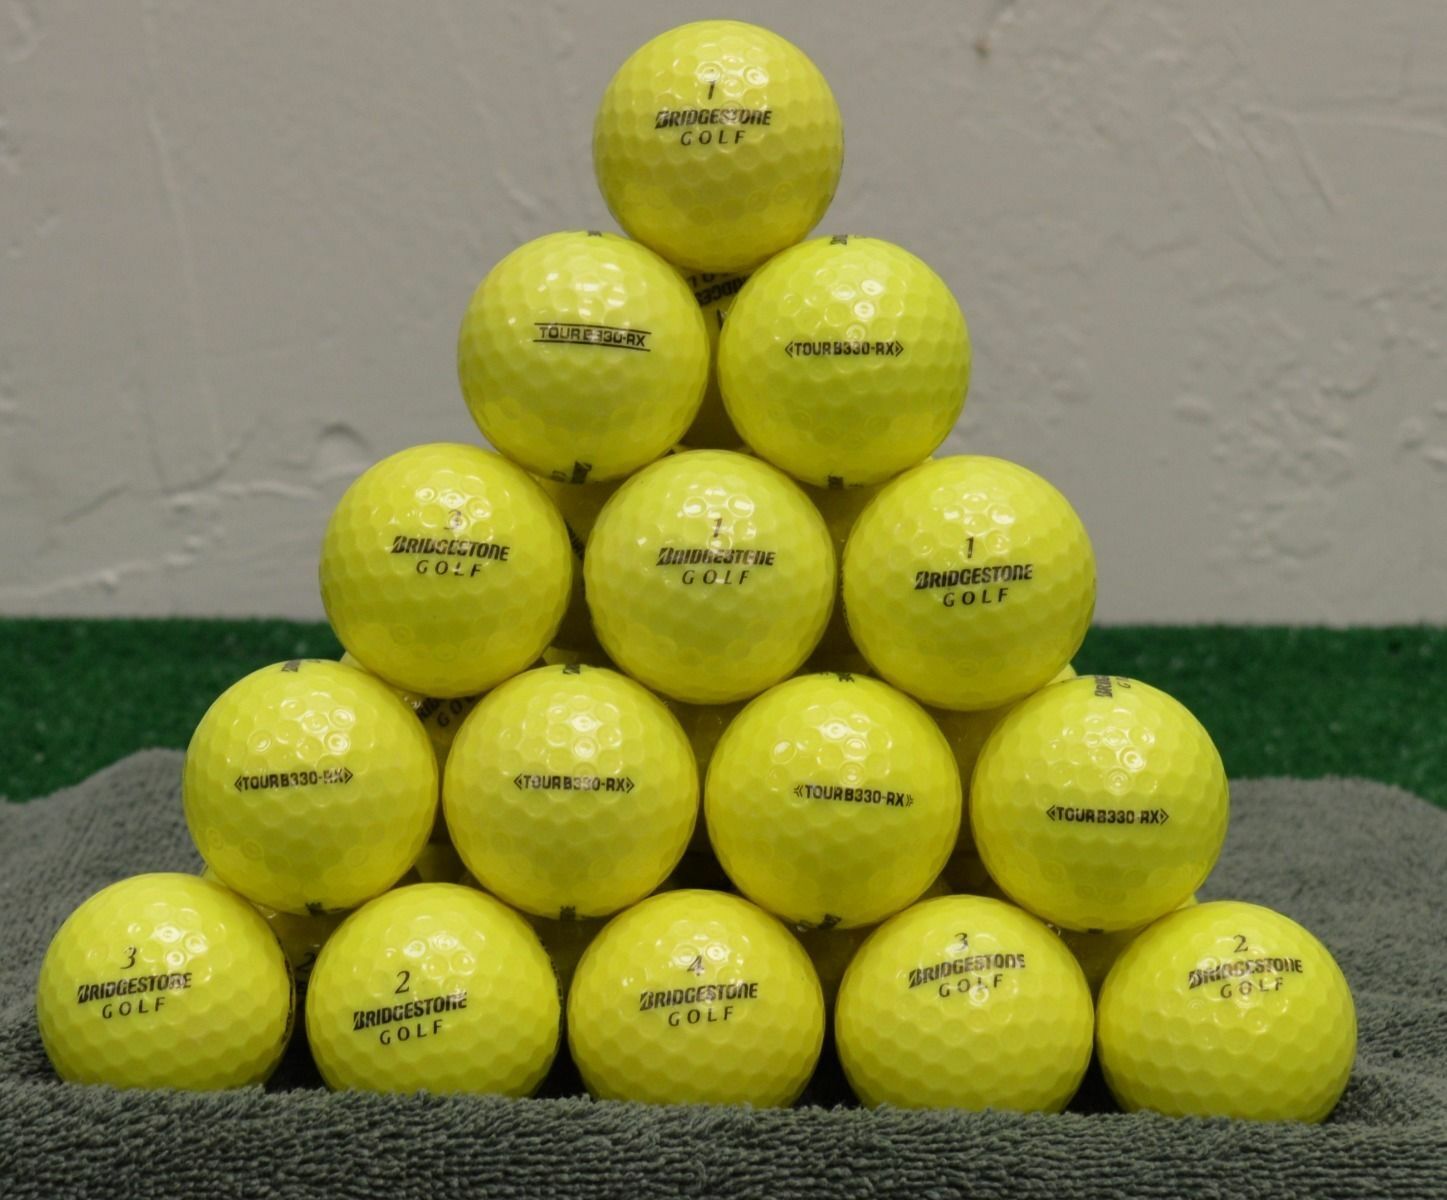 24 Bridgestone B330RX 5A Yellow Golf Balls